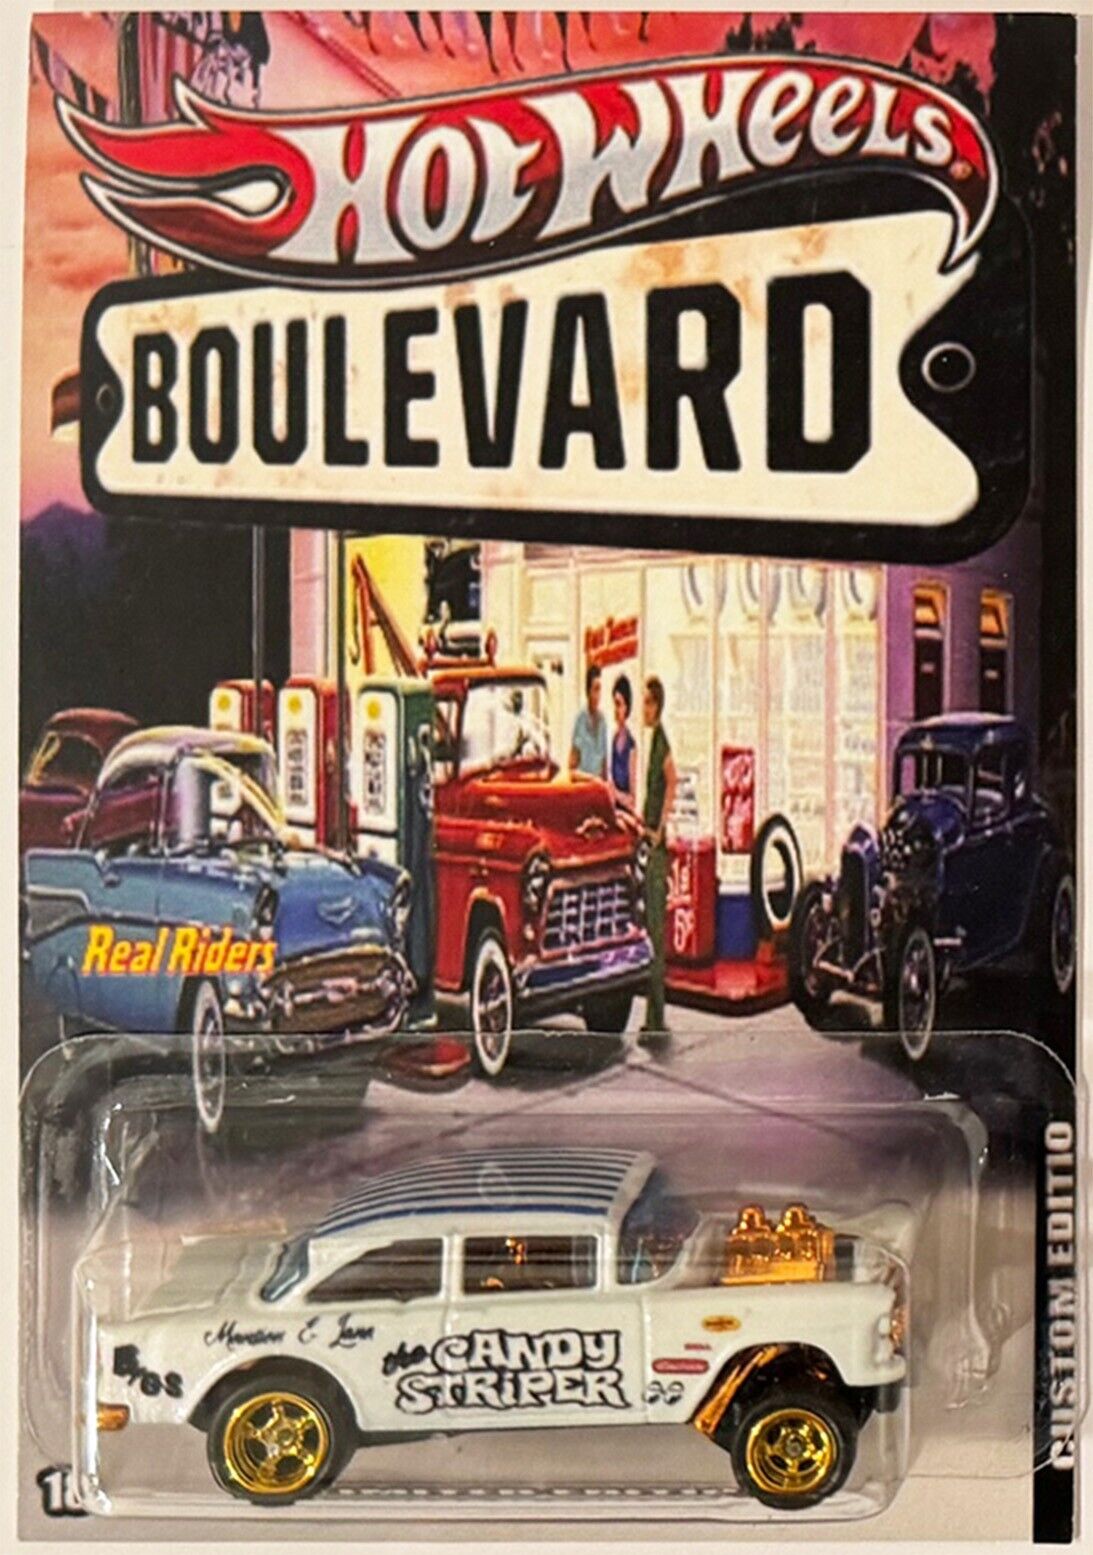 '55 Gasser Candy Striper Boulevard Series Custom Hot Wheels Car w/ Real Riders